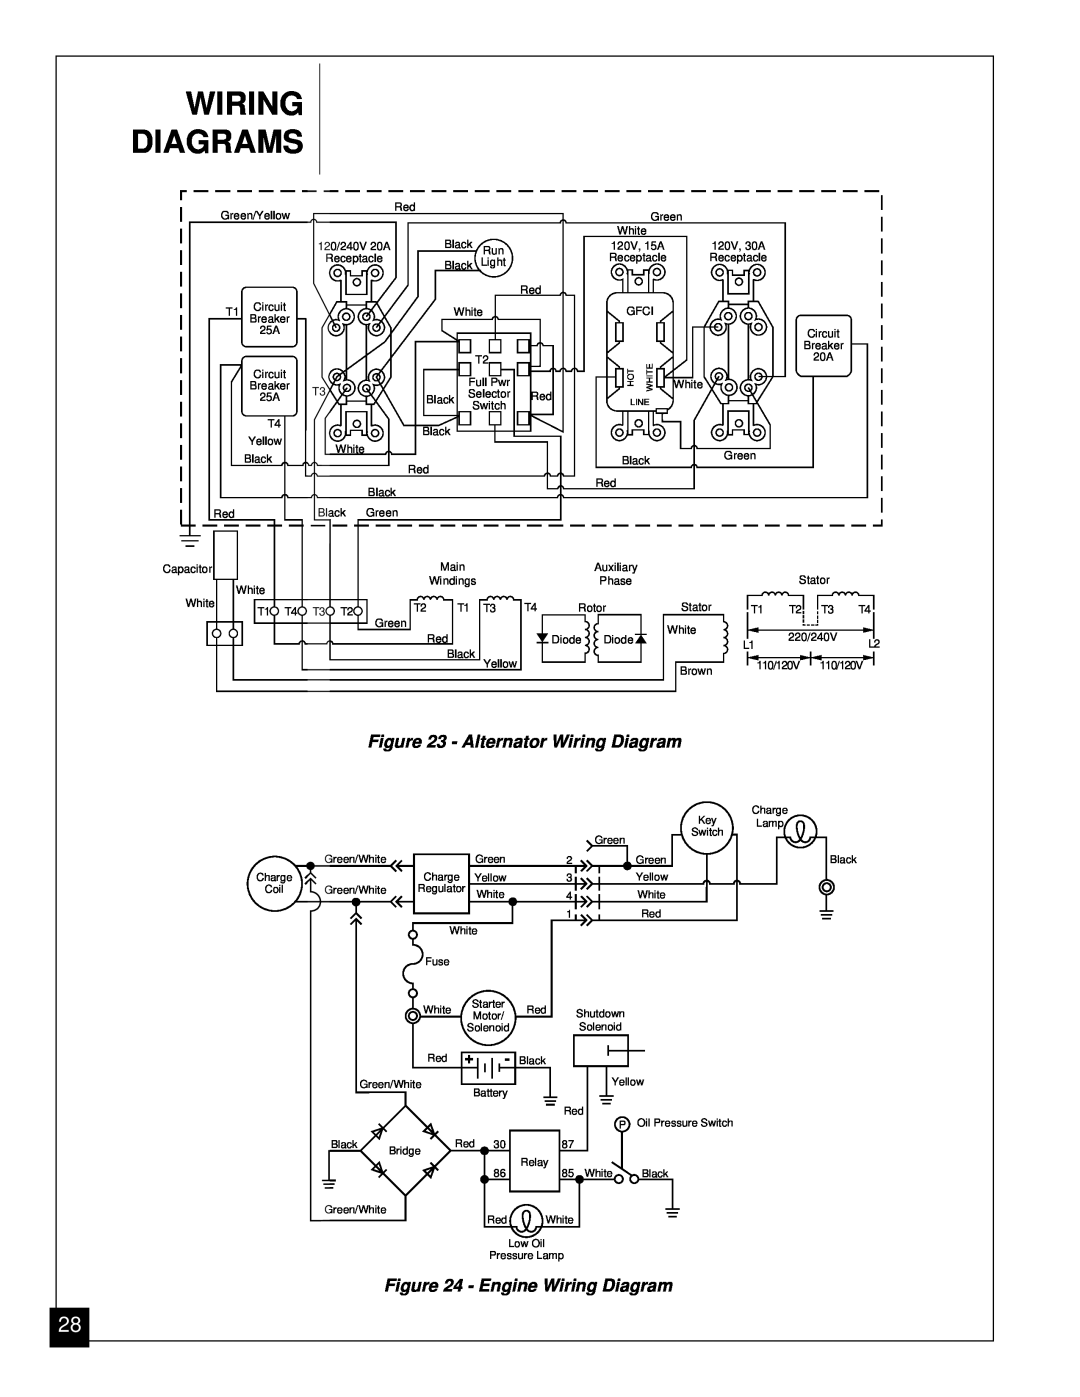 Master Lock MGY5000 installation manual Diagrams, Alternator Wiring Diagram, Engine Wiring Diagram 